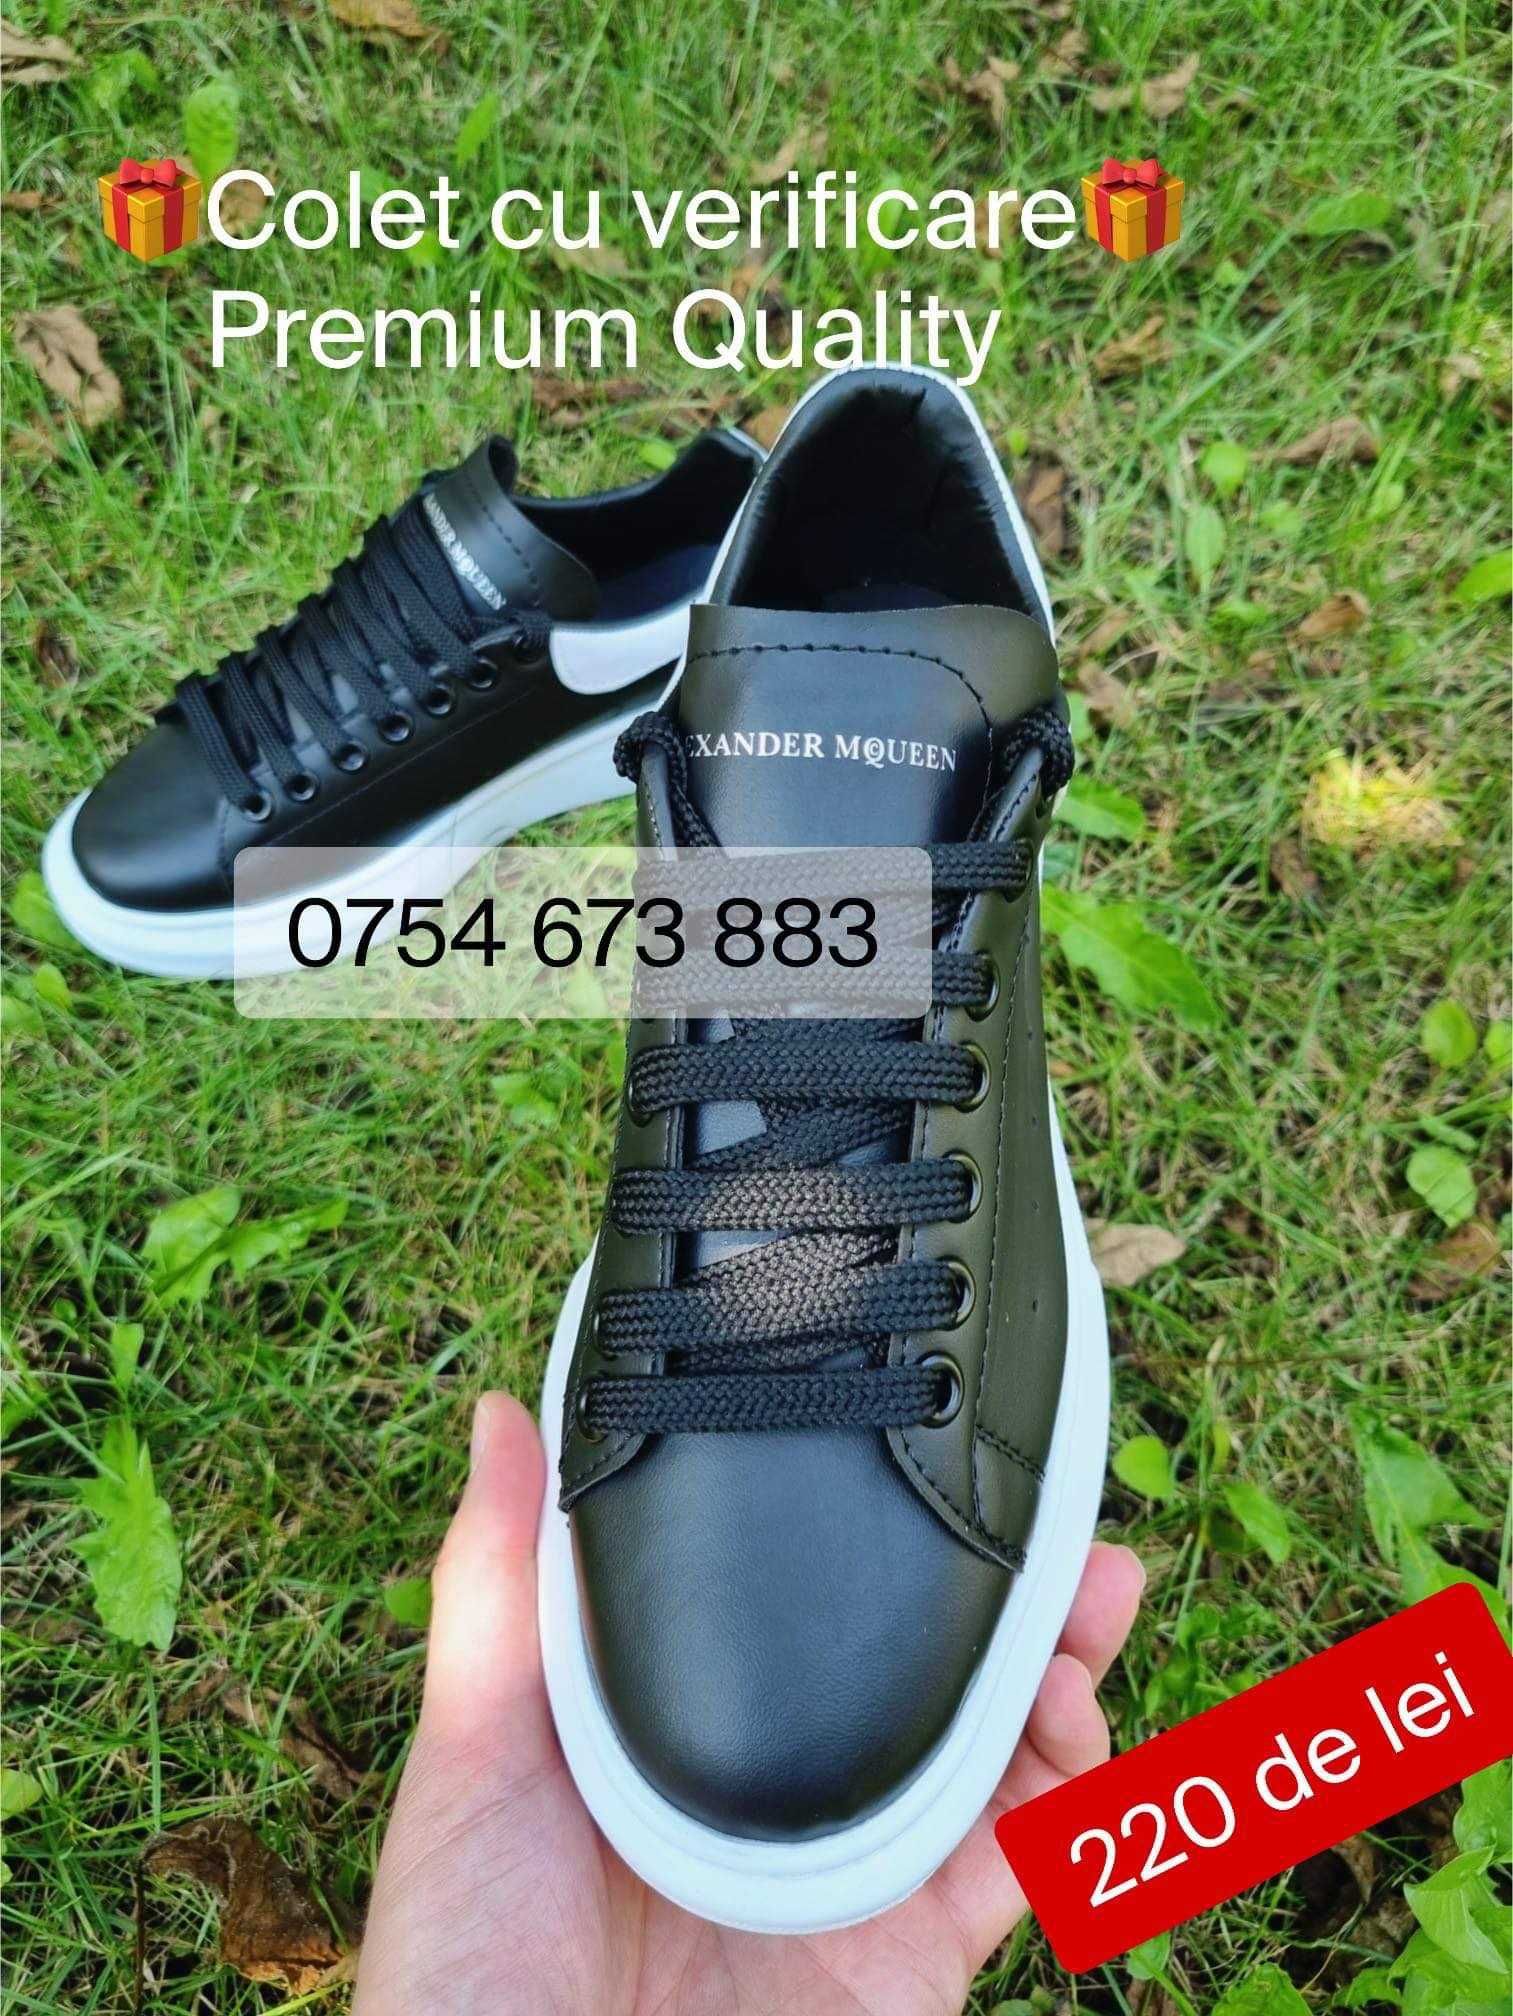 Adidasi Alexander McQueen Premium - Poze reale + Verificare Colet